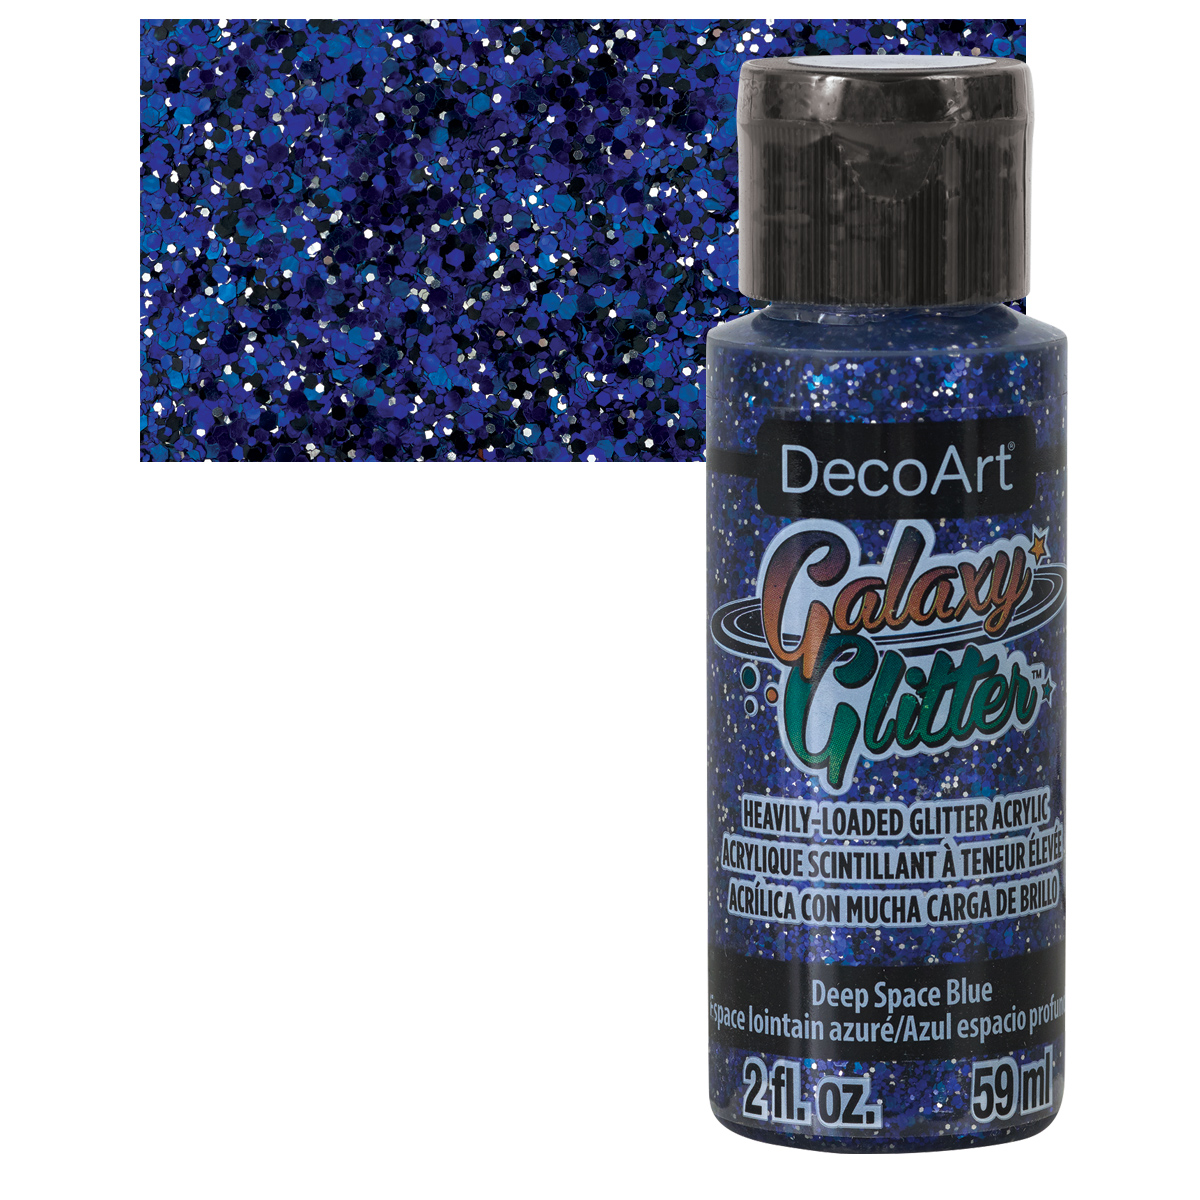 Decoart Galaxy Glitter Acrylic Paint 2oz Moon - Silver